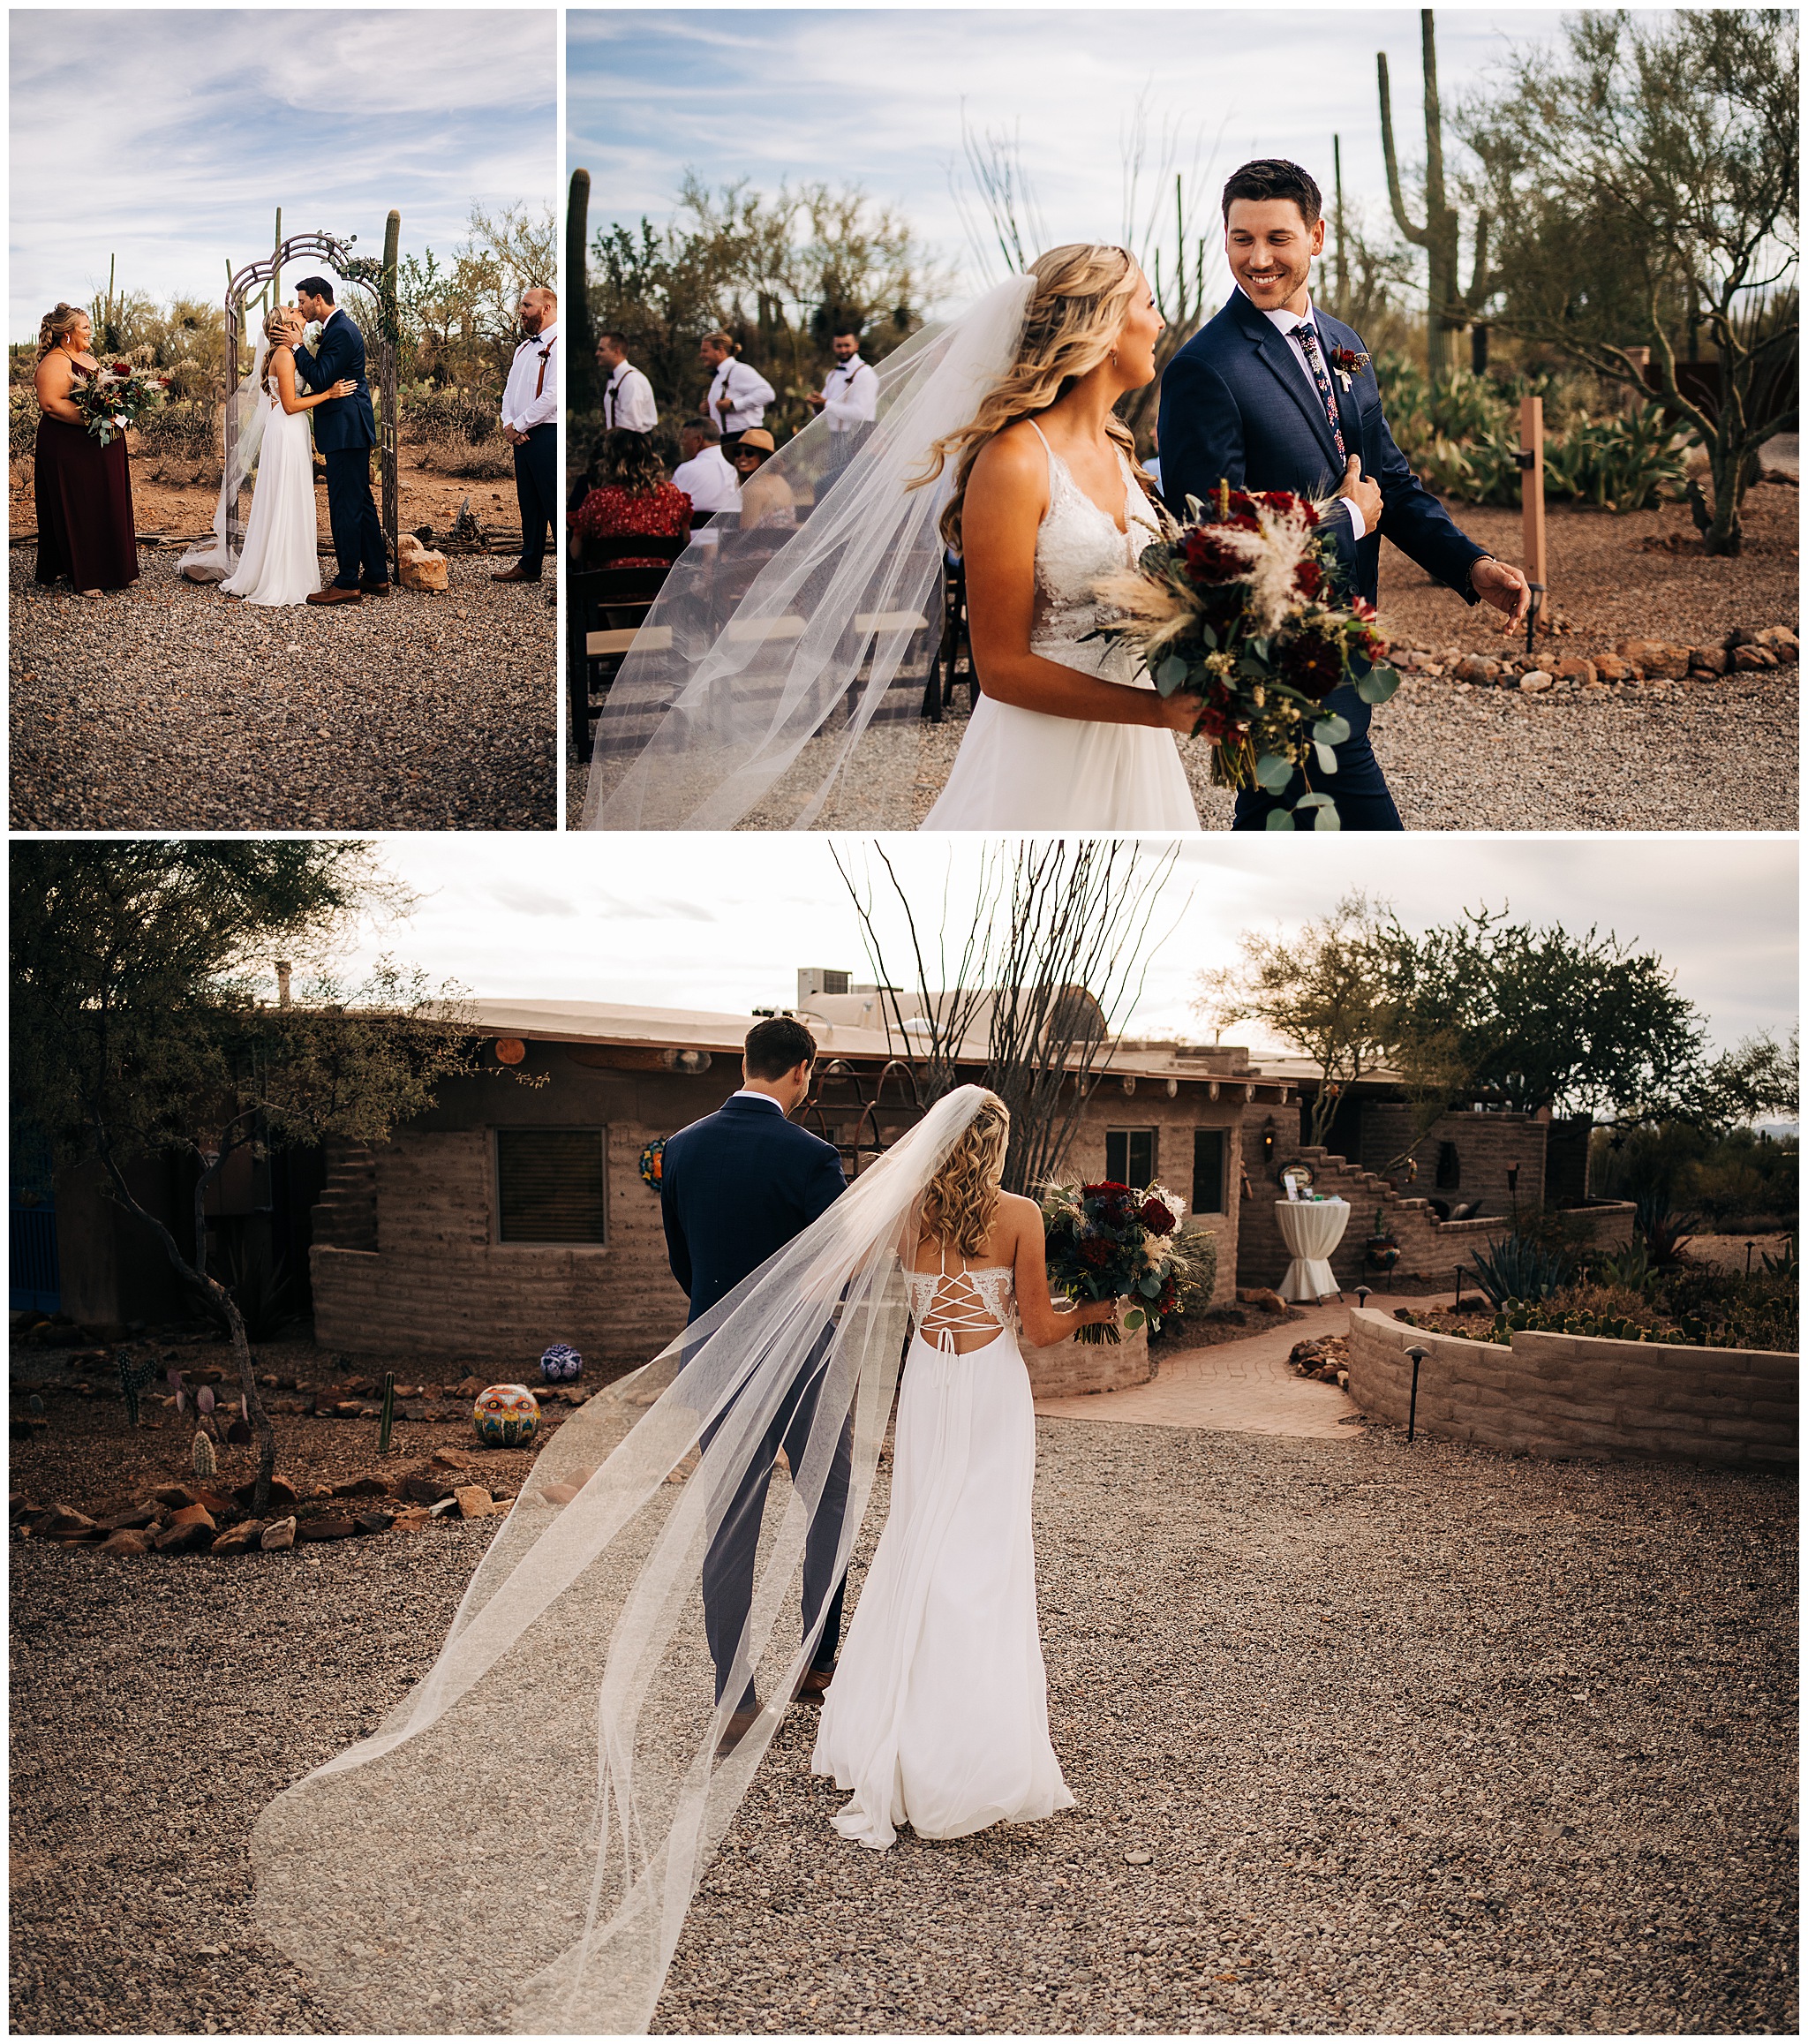 Tucson AZ wedding, destination, delaware philly philadelphia microwedding cactus  casa tierra adobe bed and breakfast  ceremony